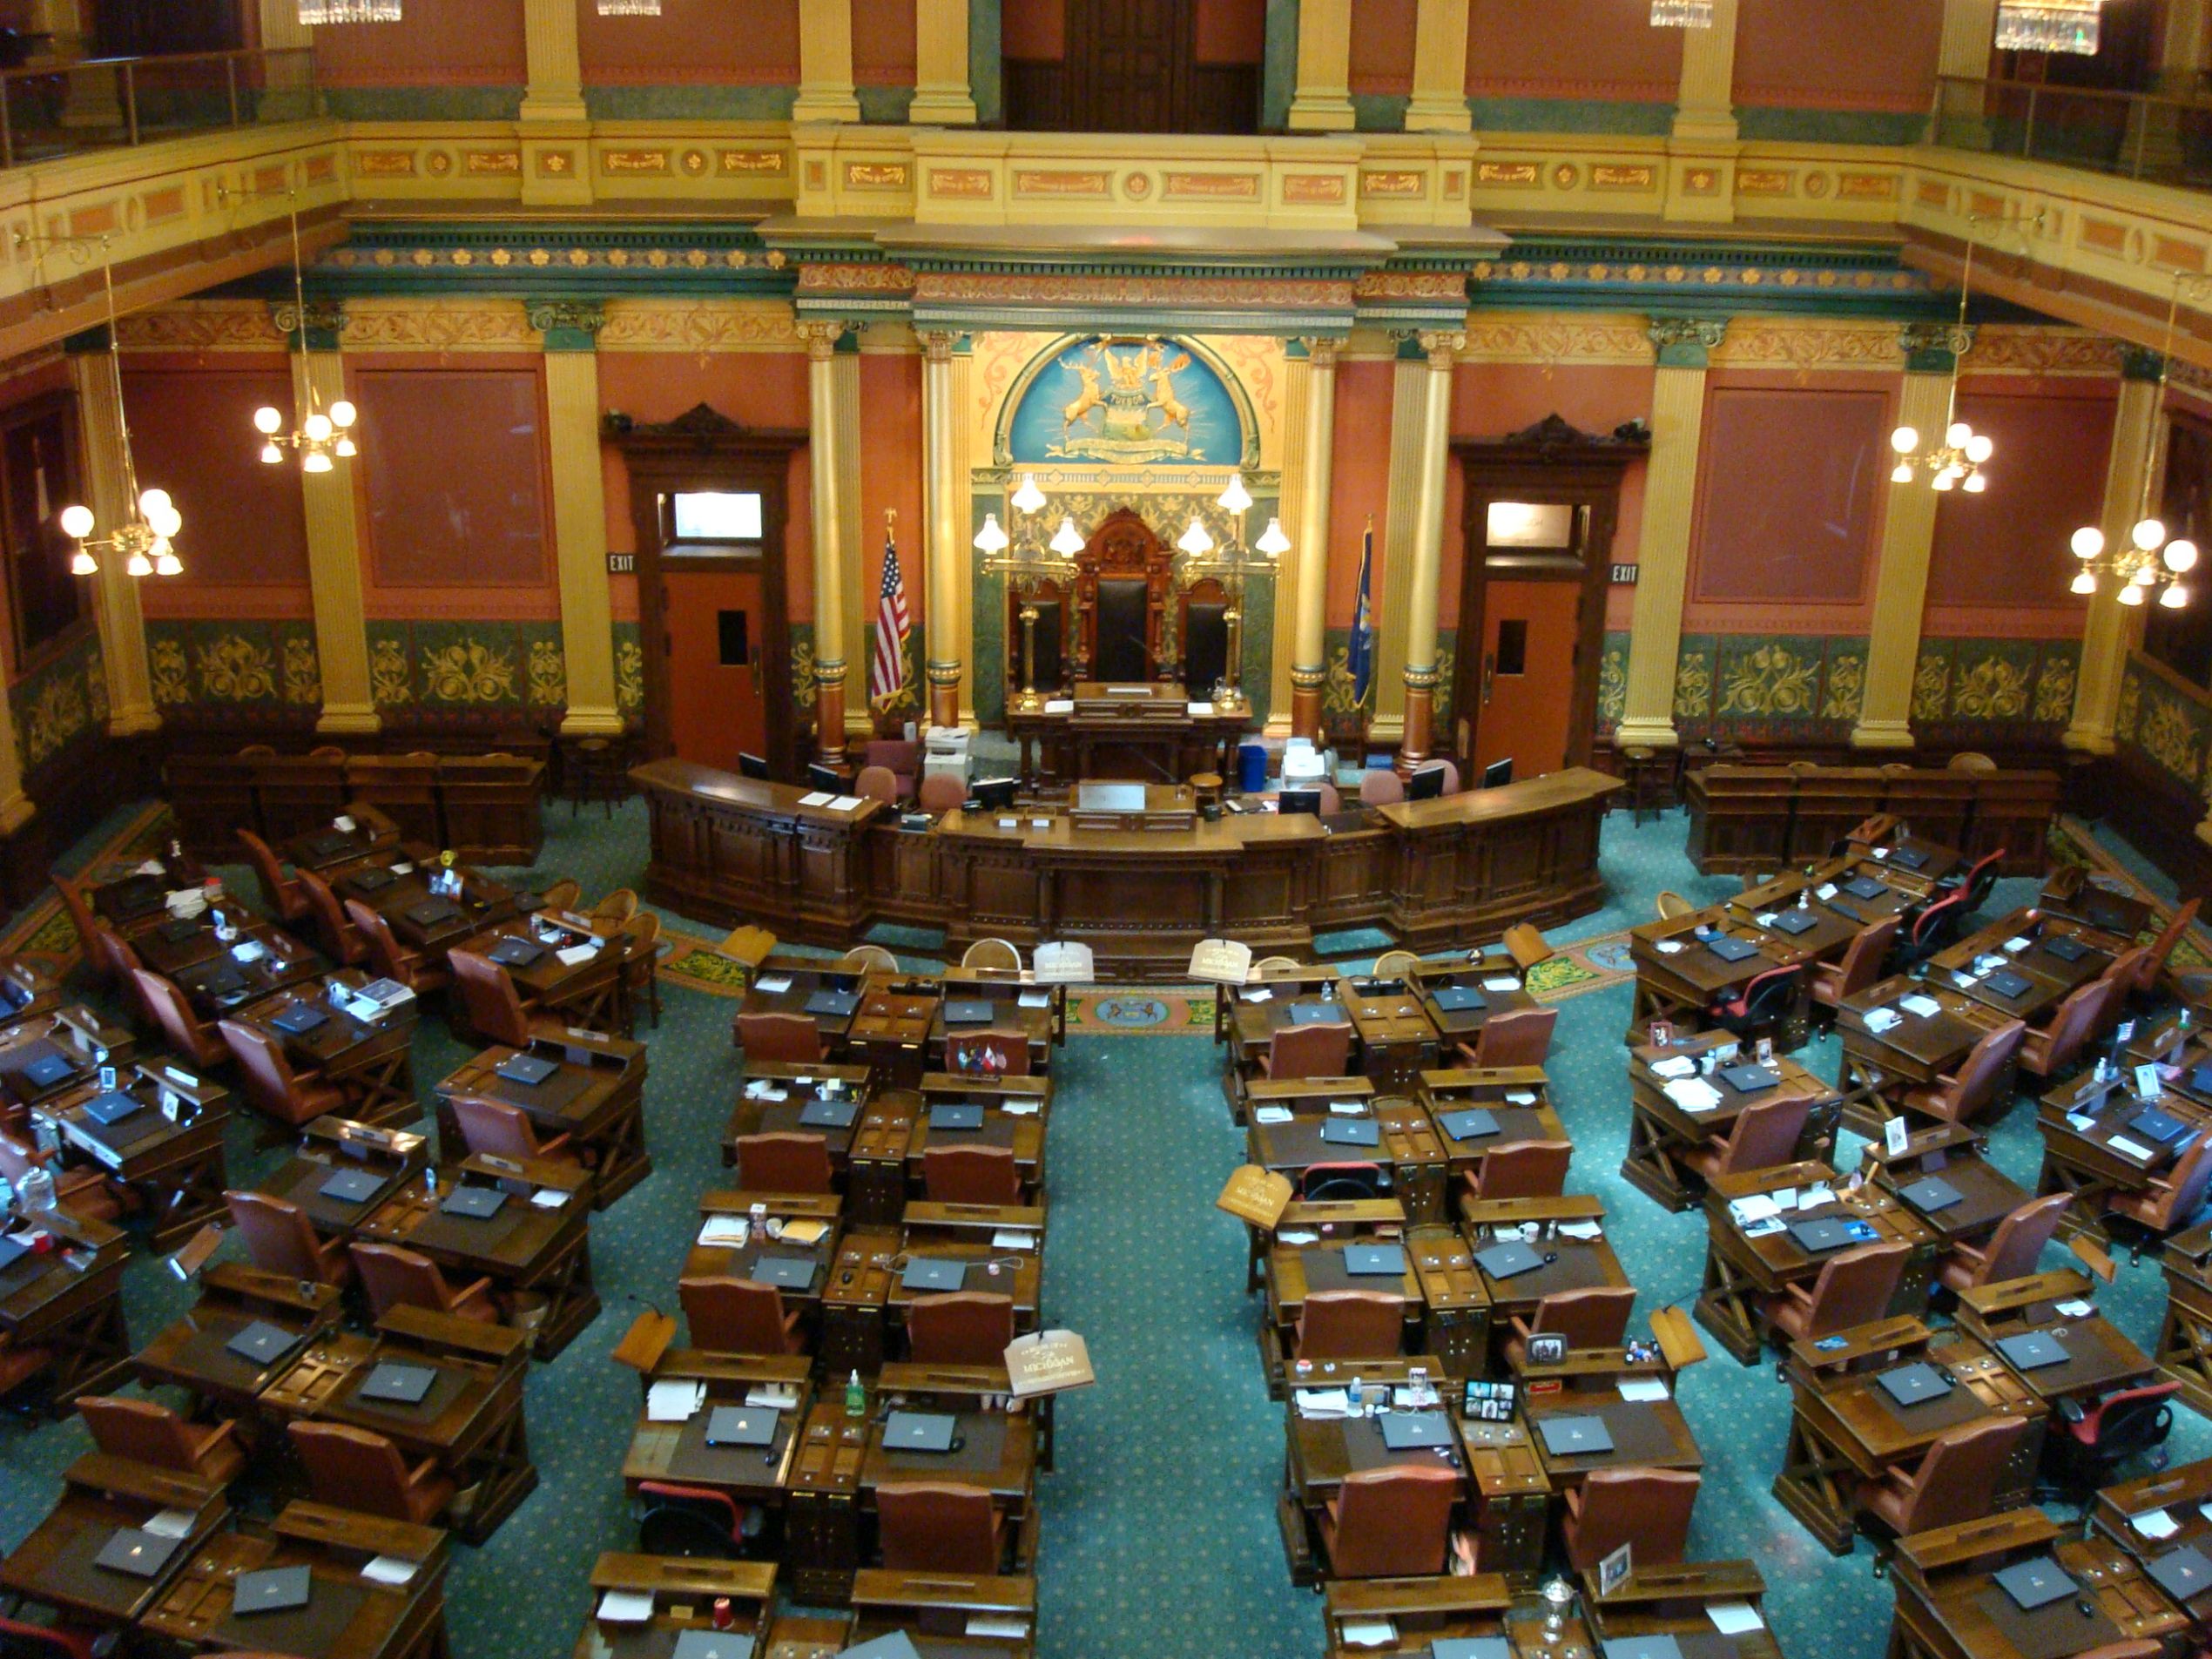 The Michigan House of Representatives chamber. 